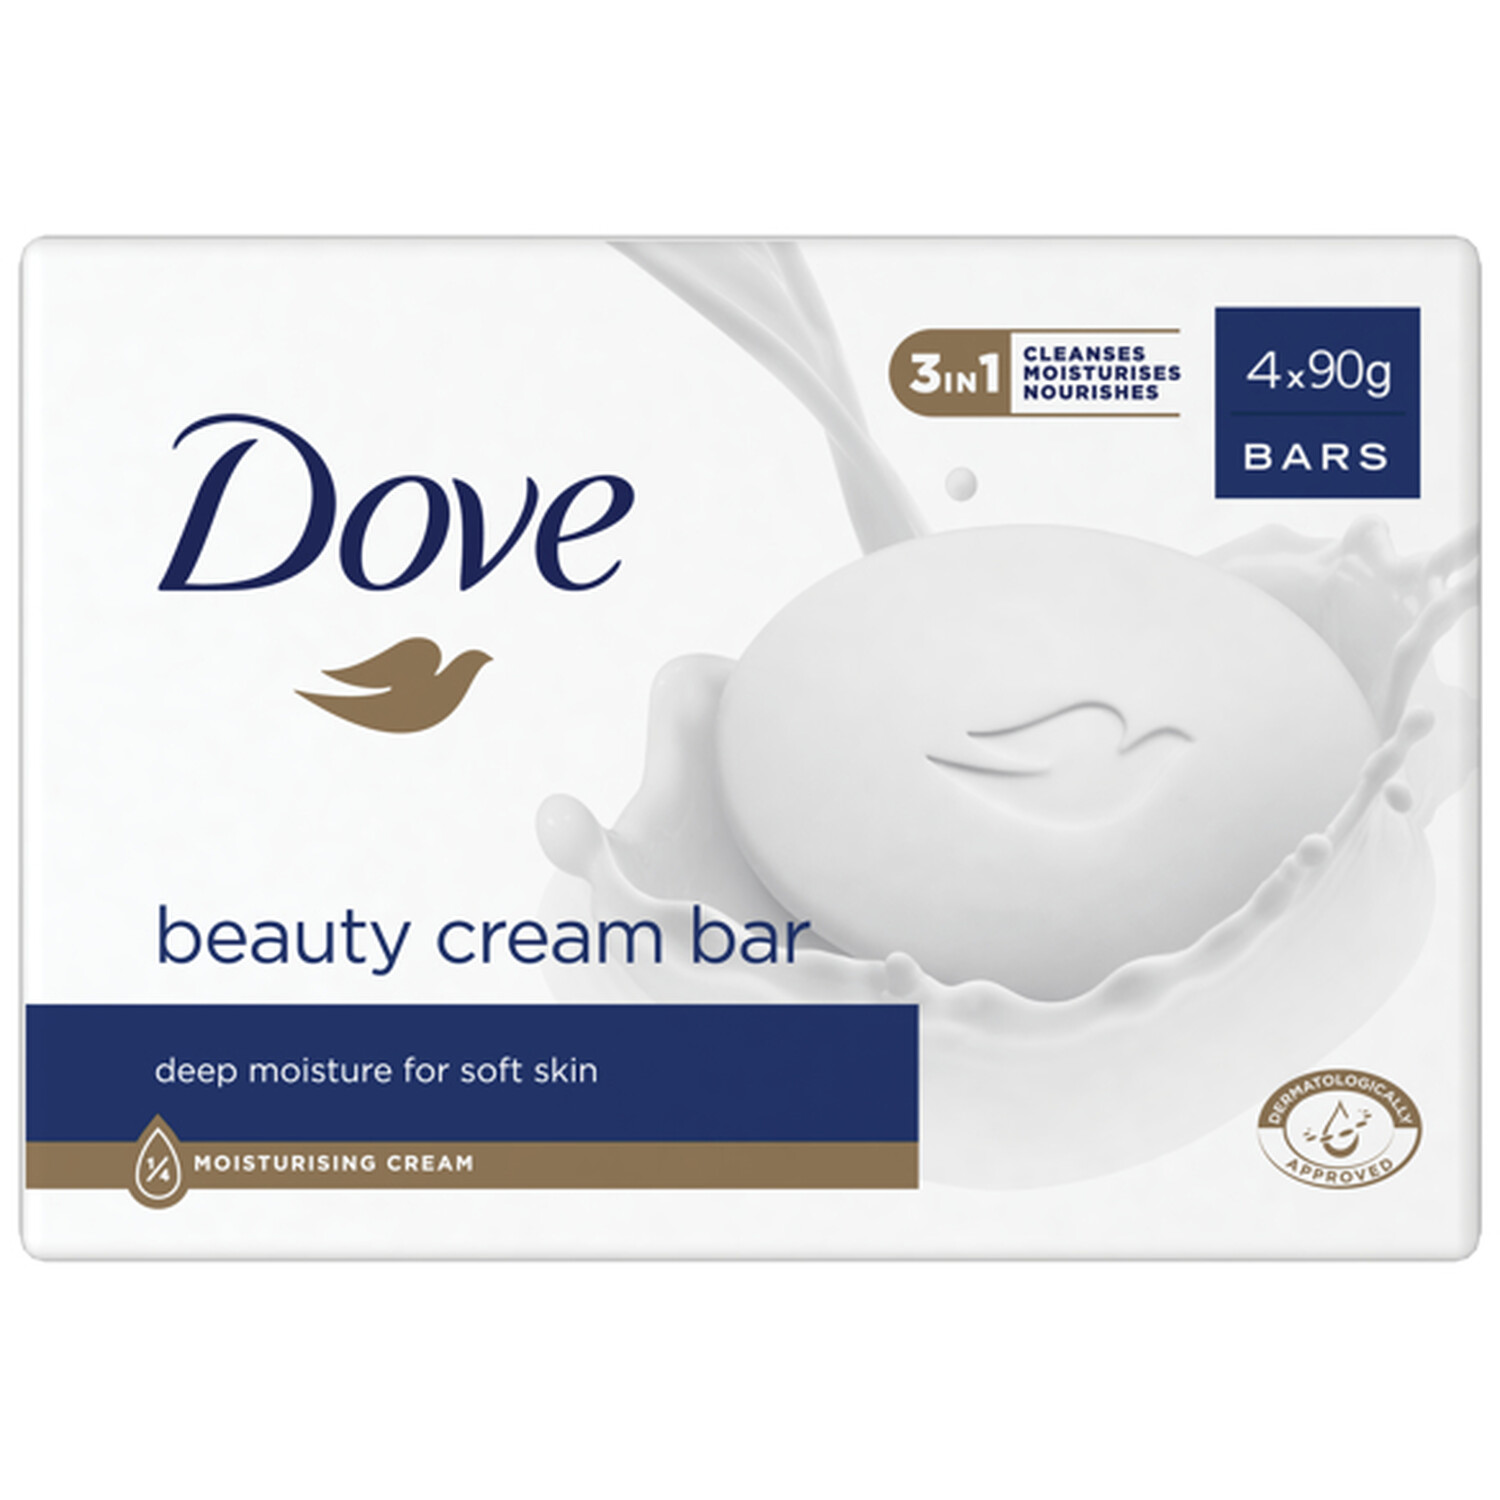 Pack of 4 Dove Beauty Cream Bars - White Image